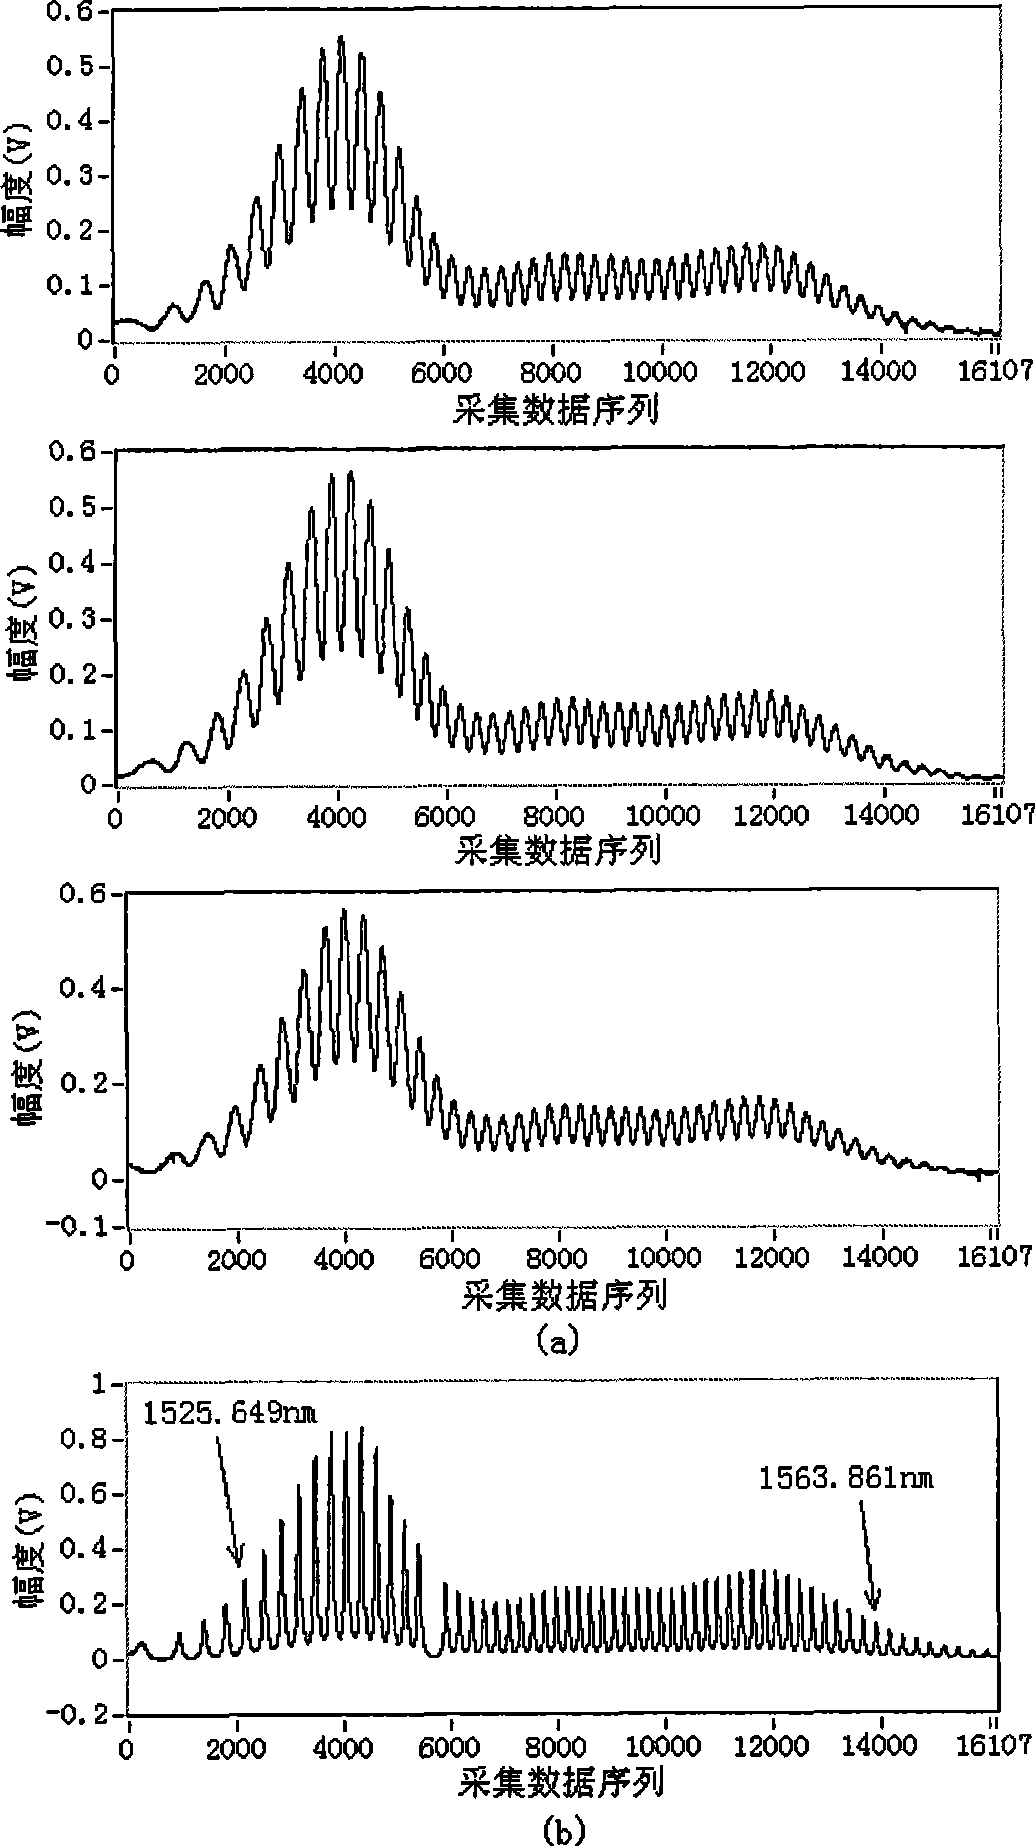 Wavelength scanning white light interferometry method based on 3*3 coupler